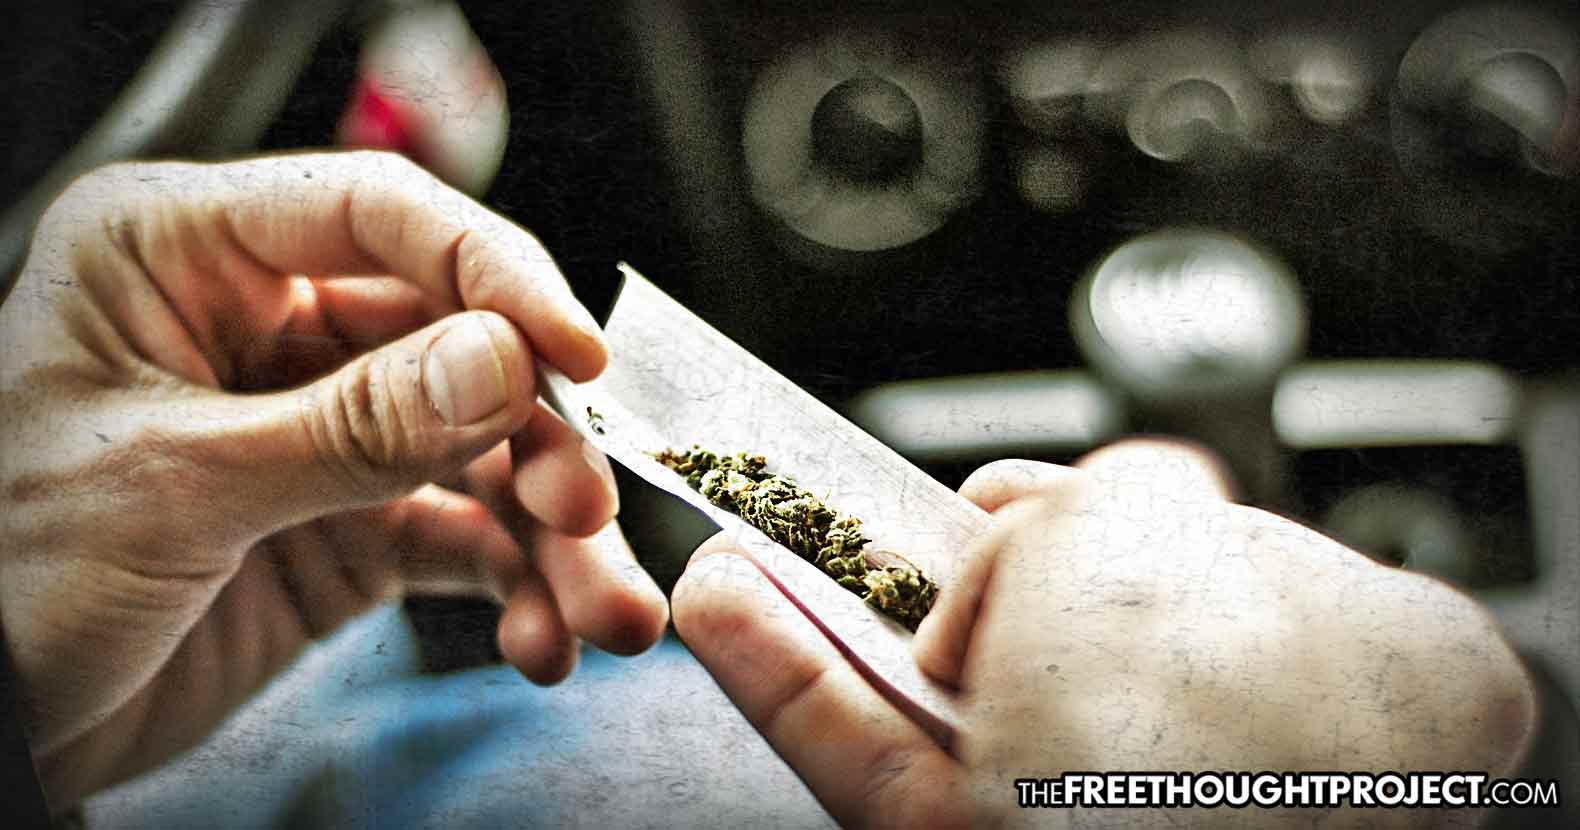 Despite Government Fear Mongering, Arizona Sees DUIs Drop
After Cannabis Legalization 1